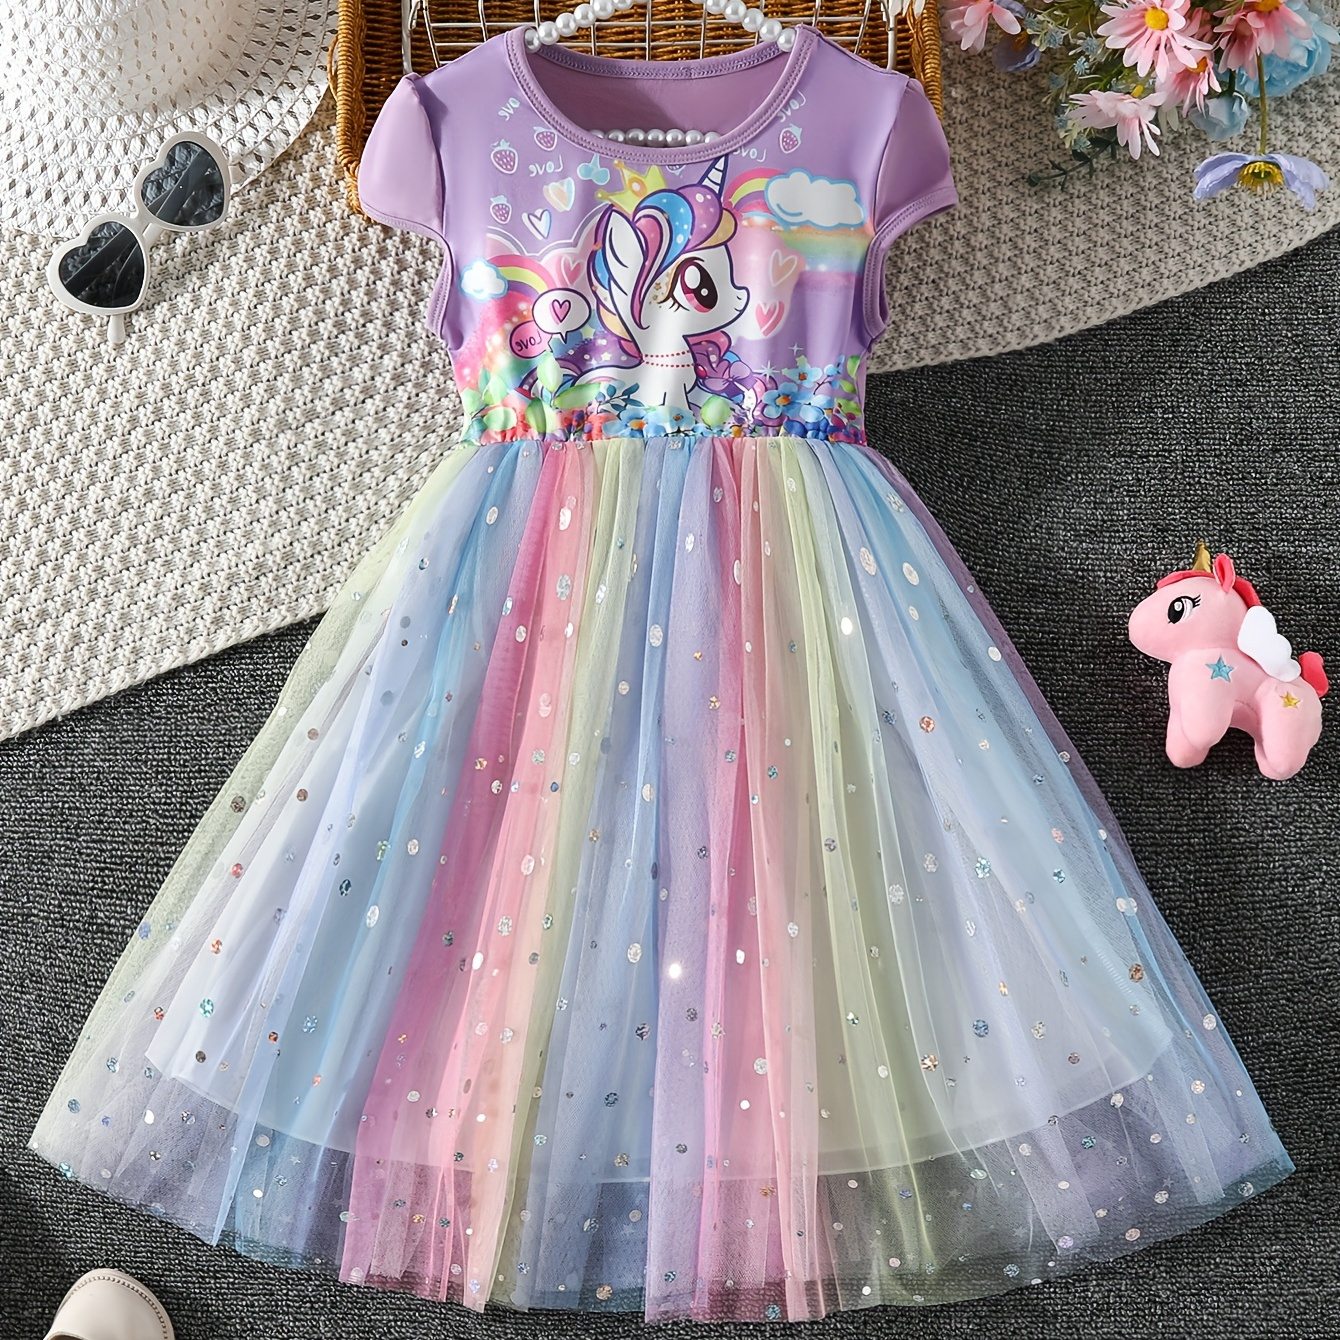 

Toddler Girls Dreamy Princess Tutu Dress Sequin Unicorn Graphic Short Sleeve Mesh Dress Summer Clothes Gift